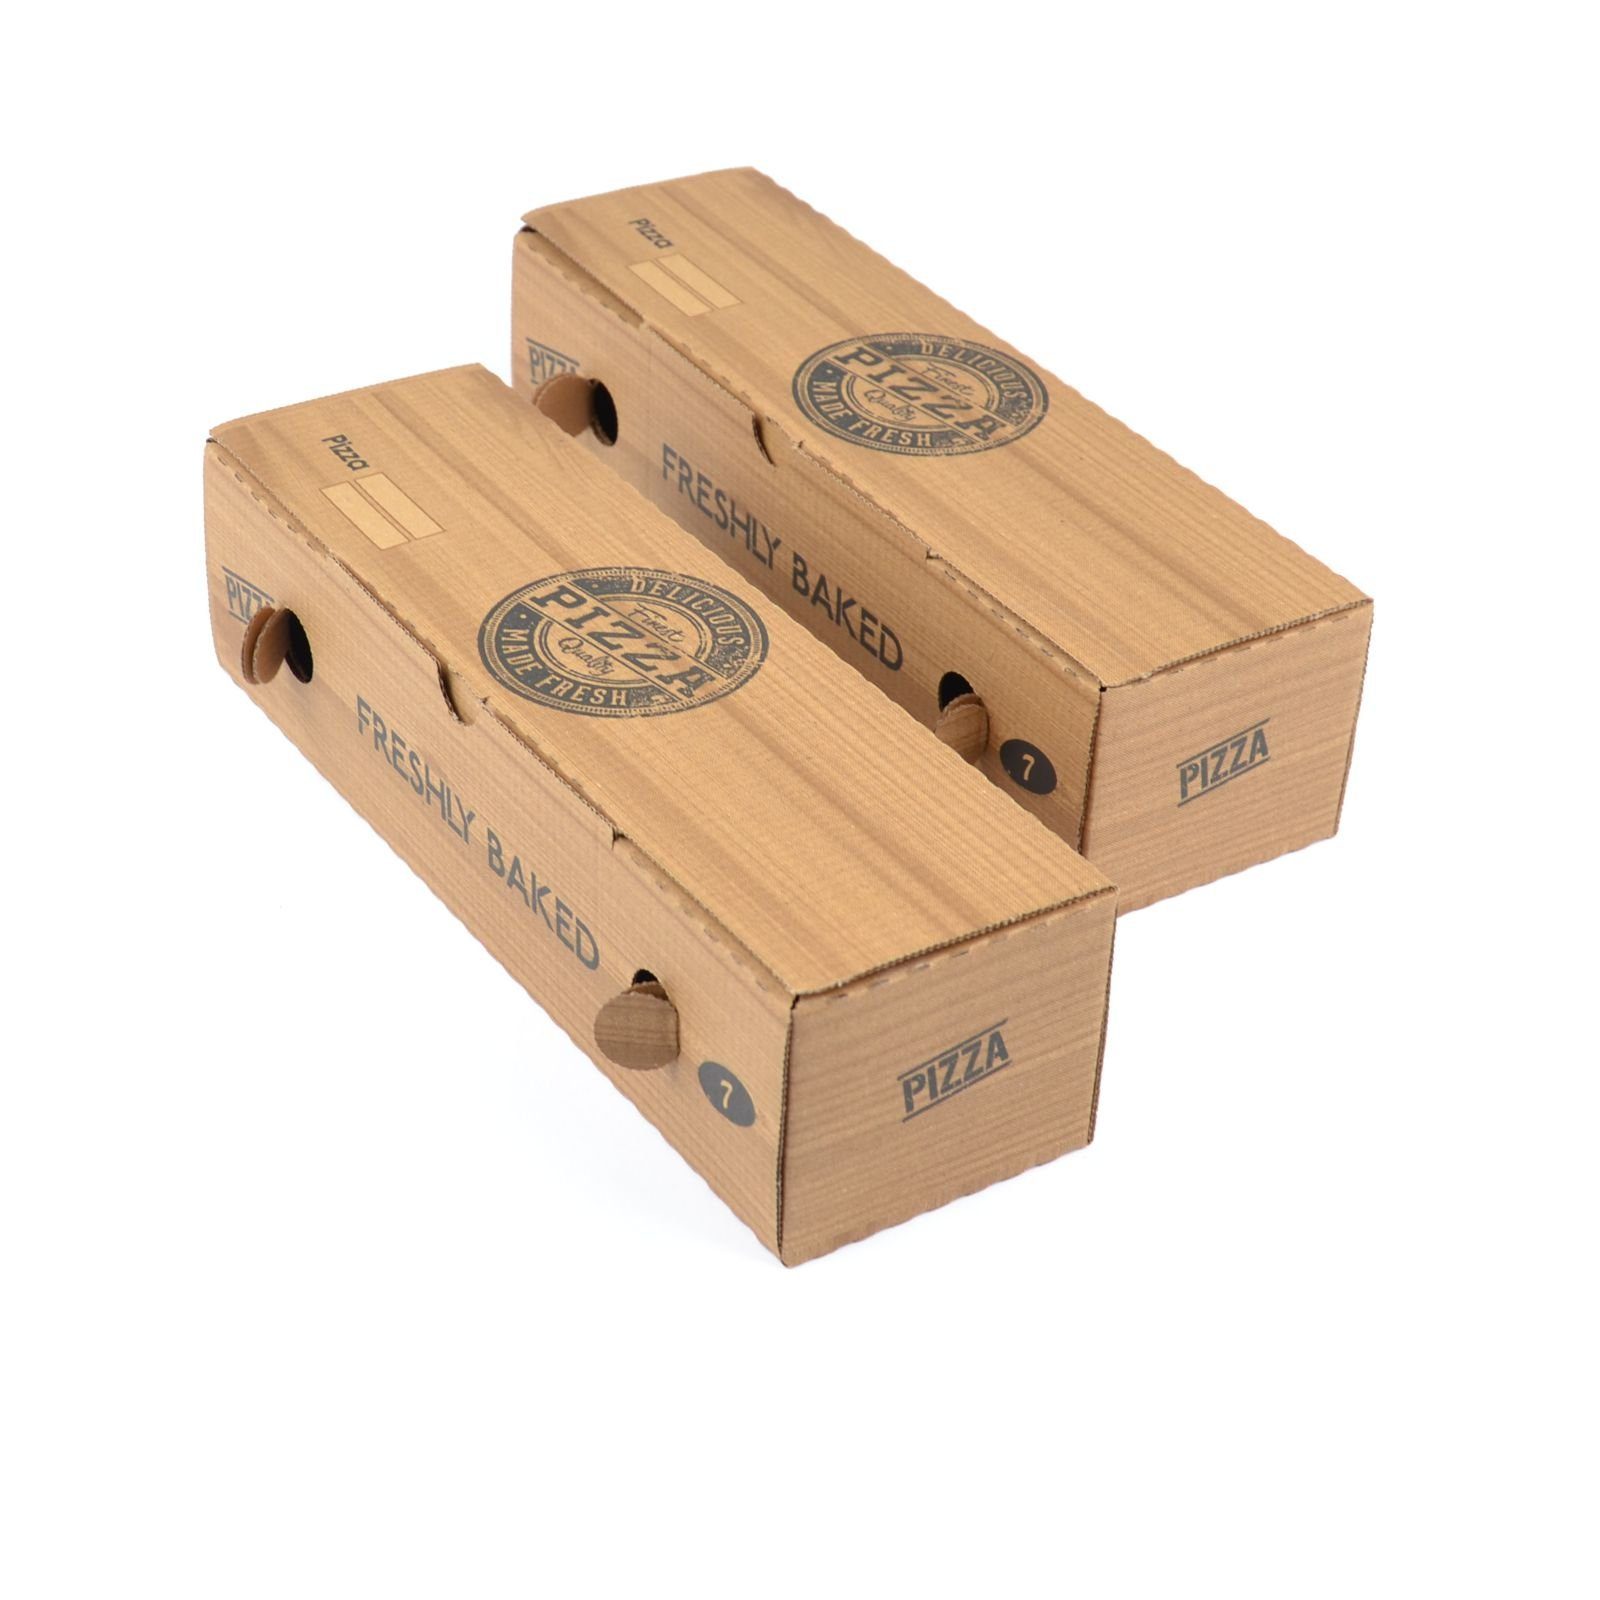 Einwegschale 100 Stück Pizzakartons, Modell "Rollo" (7×8×28 cm) kraft, Pitabox Dürümbox Rollobox Pizza-Motiv kraftbraun Lahmacun Rollo Box